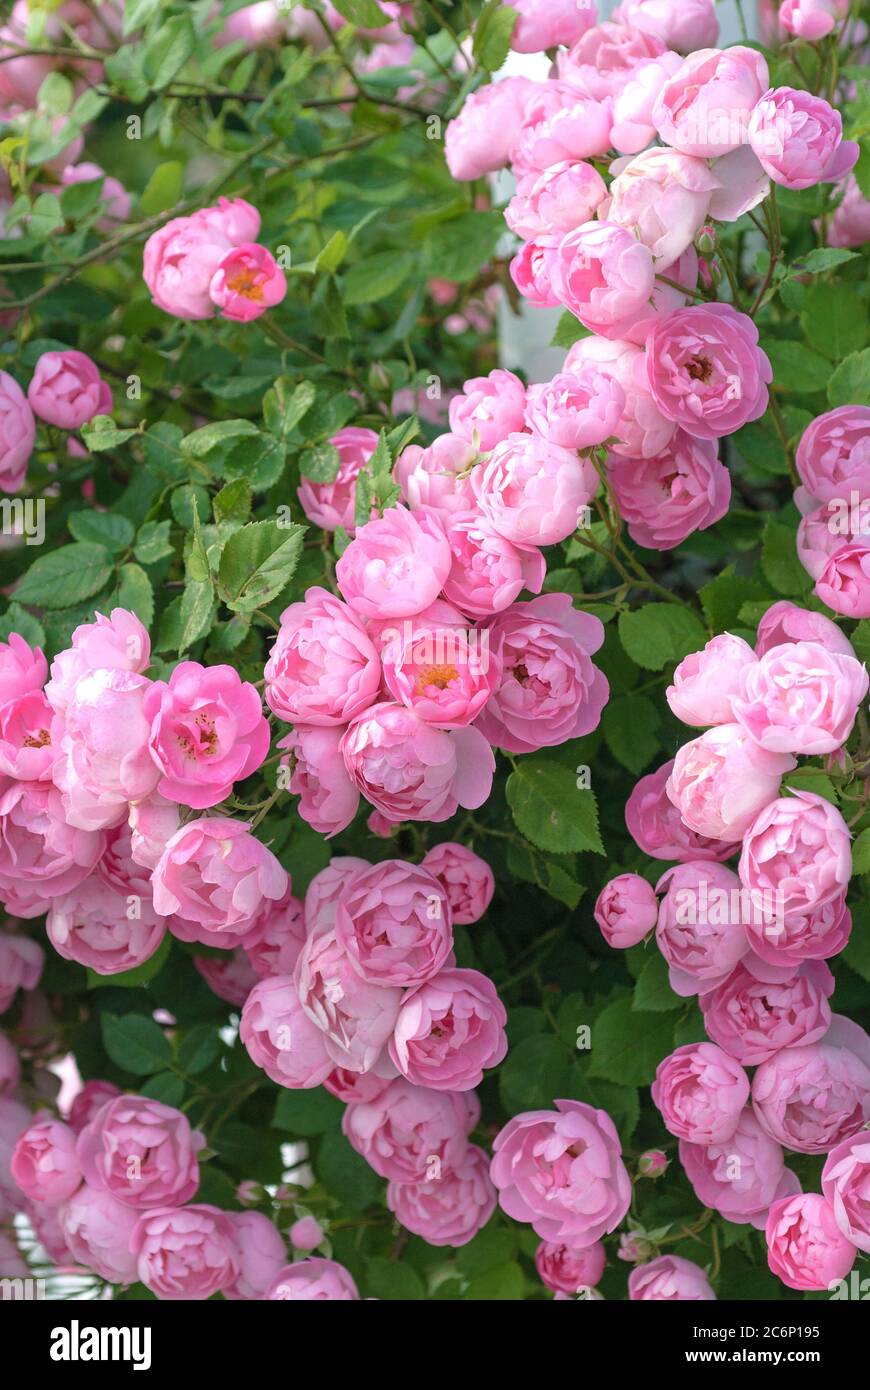 Rambler-Rose Rosa Raubritter, Rambler Rose Pink Raubritter Stock Photo -  Alamy